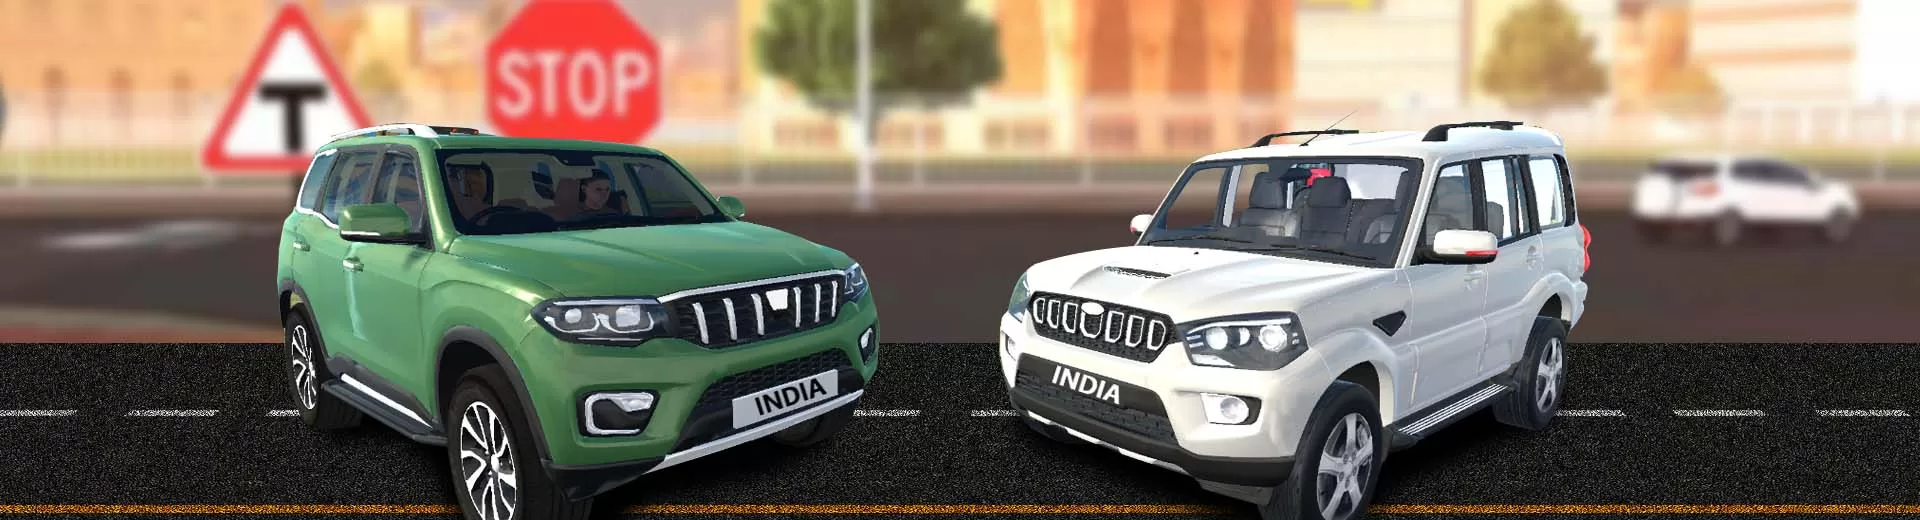 Driving Academy India Emulator Pc